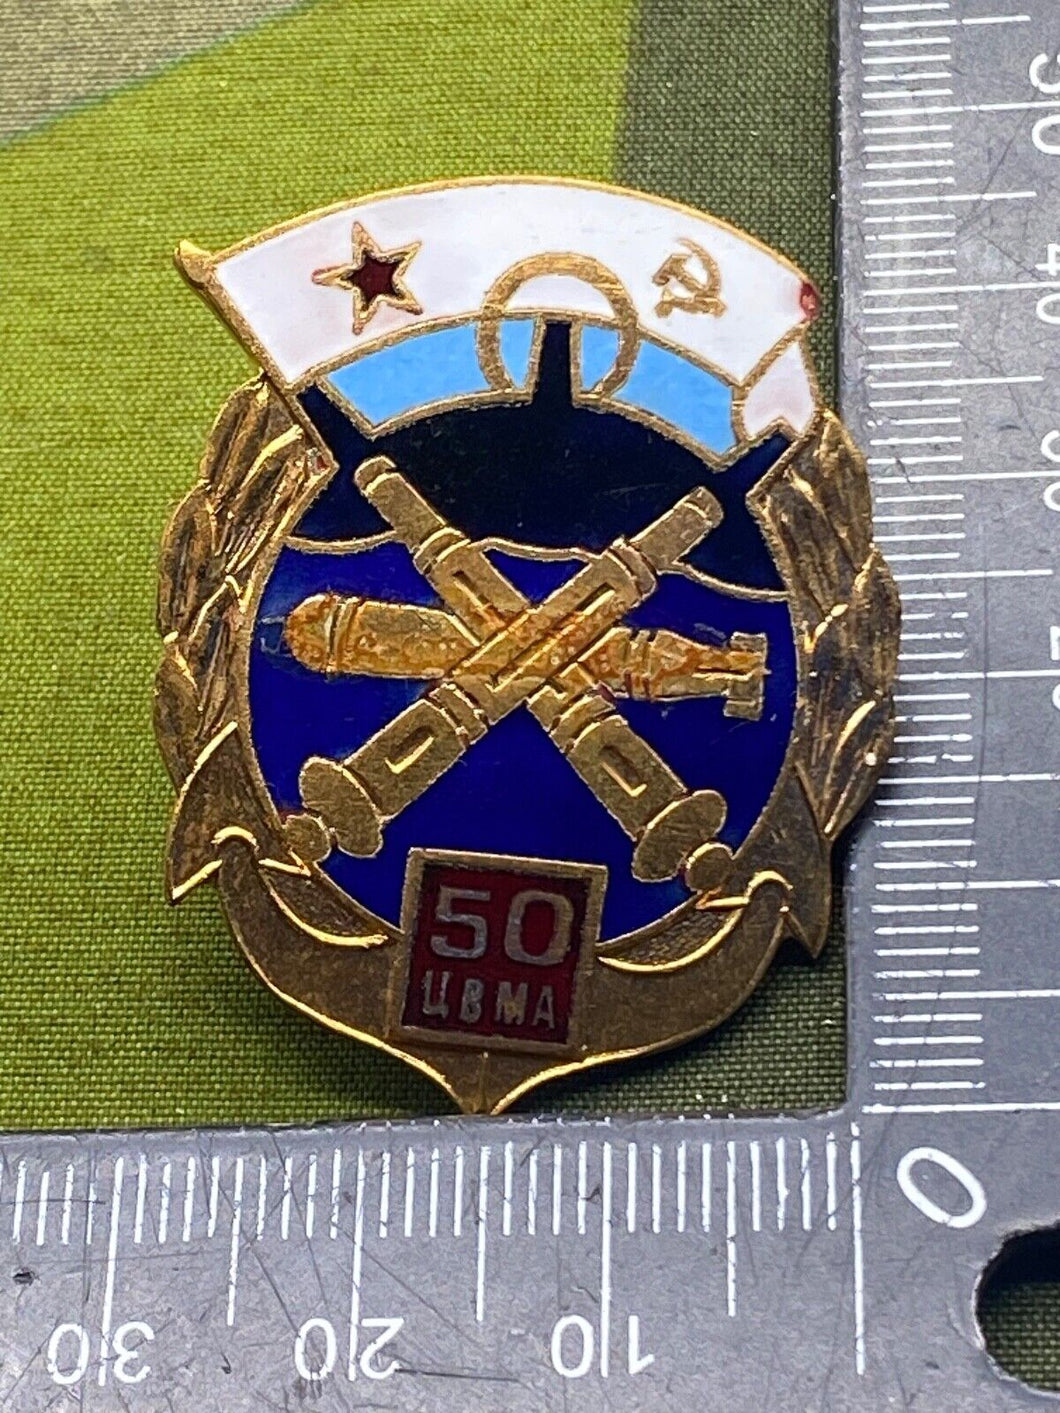 1980's/90's Era Soviet Naval Mariner's Award / Badge in Excellent Condition